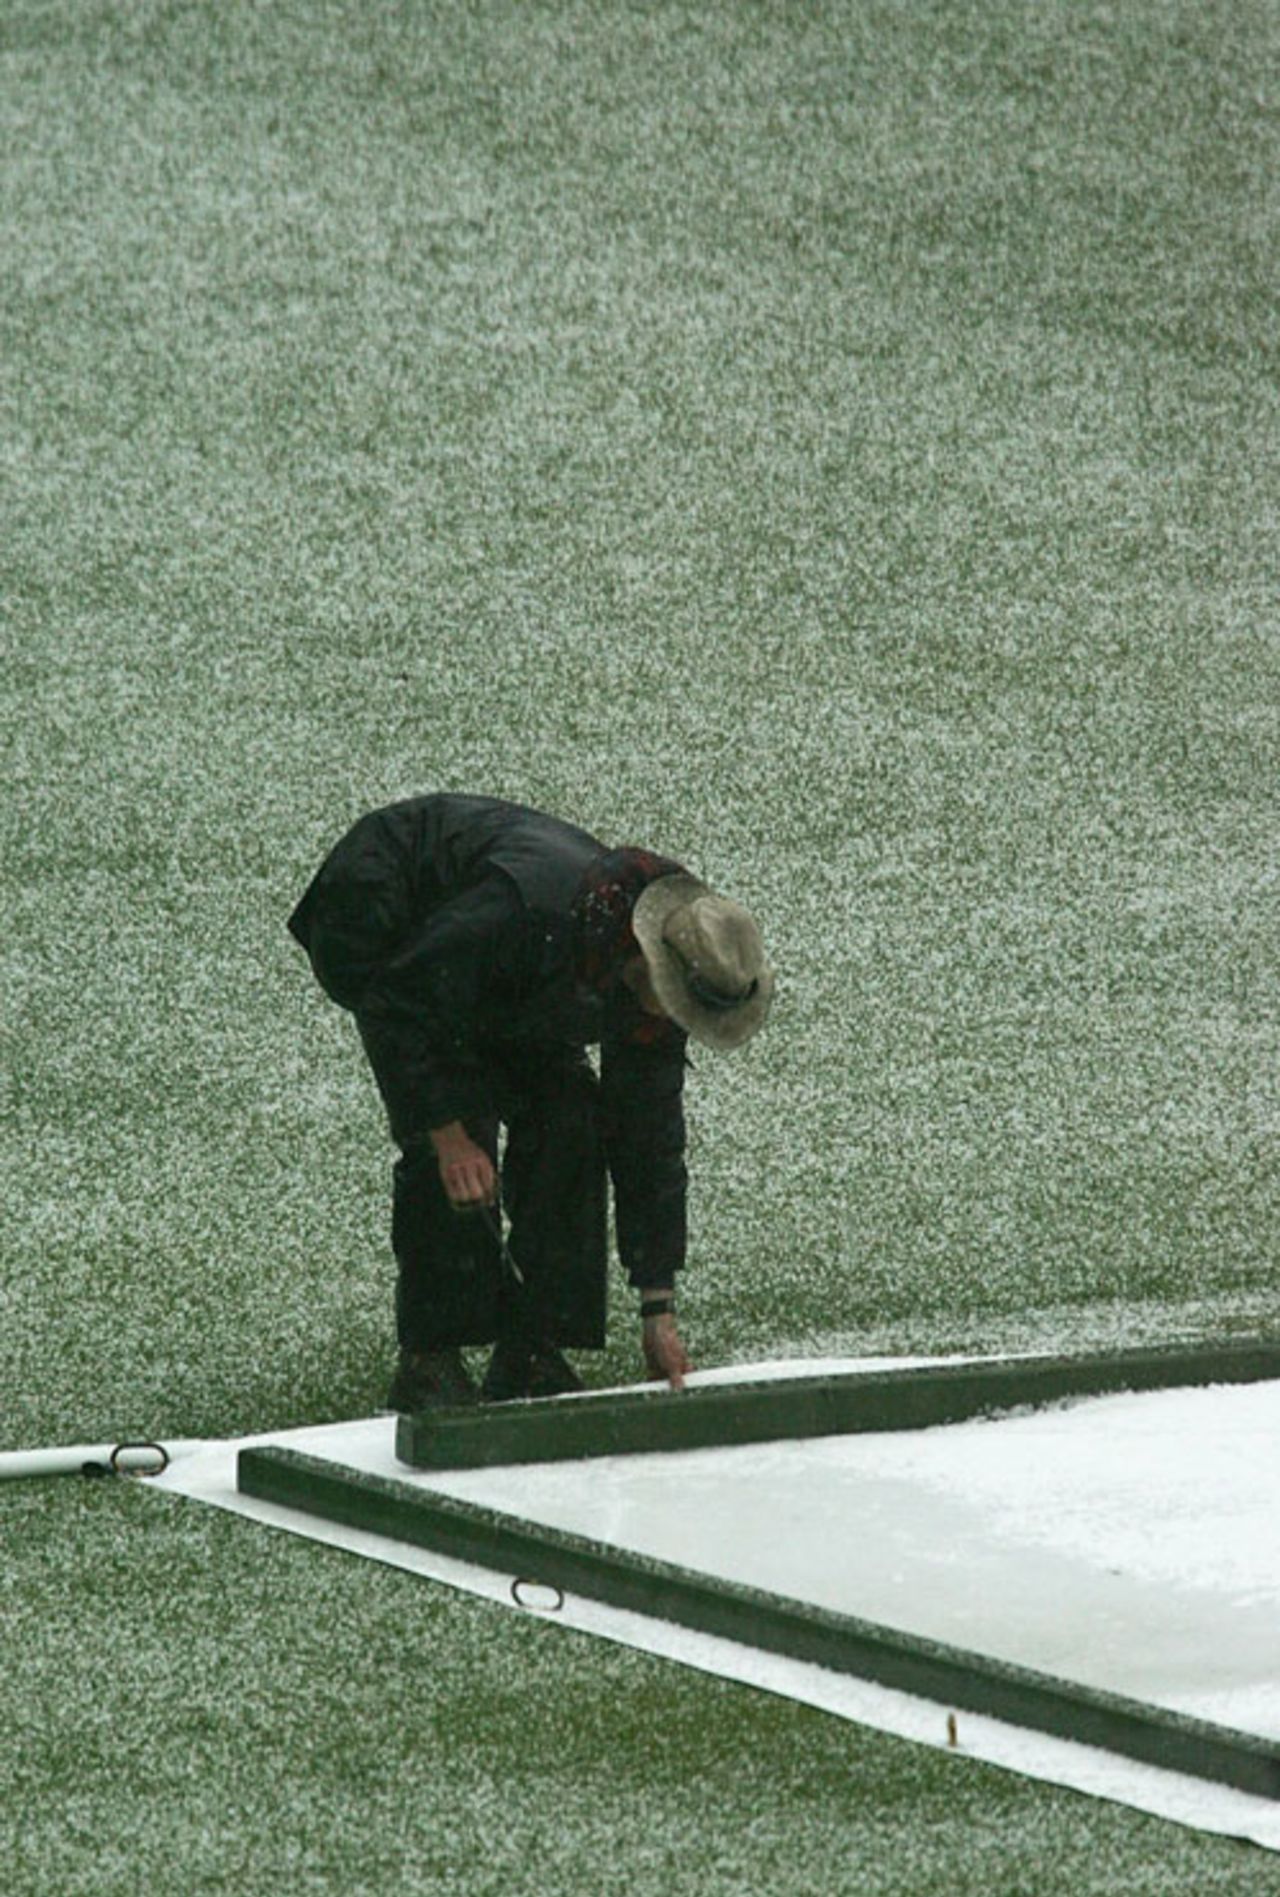 A groundsman covers the pitch during a hail storm, Victoria v Tasmania, MCG, November 15, 2006